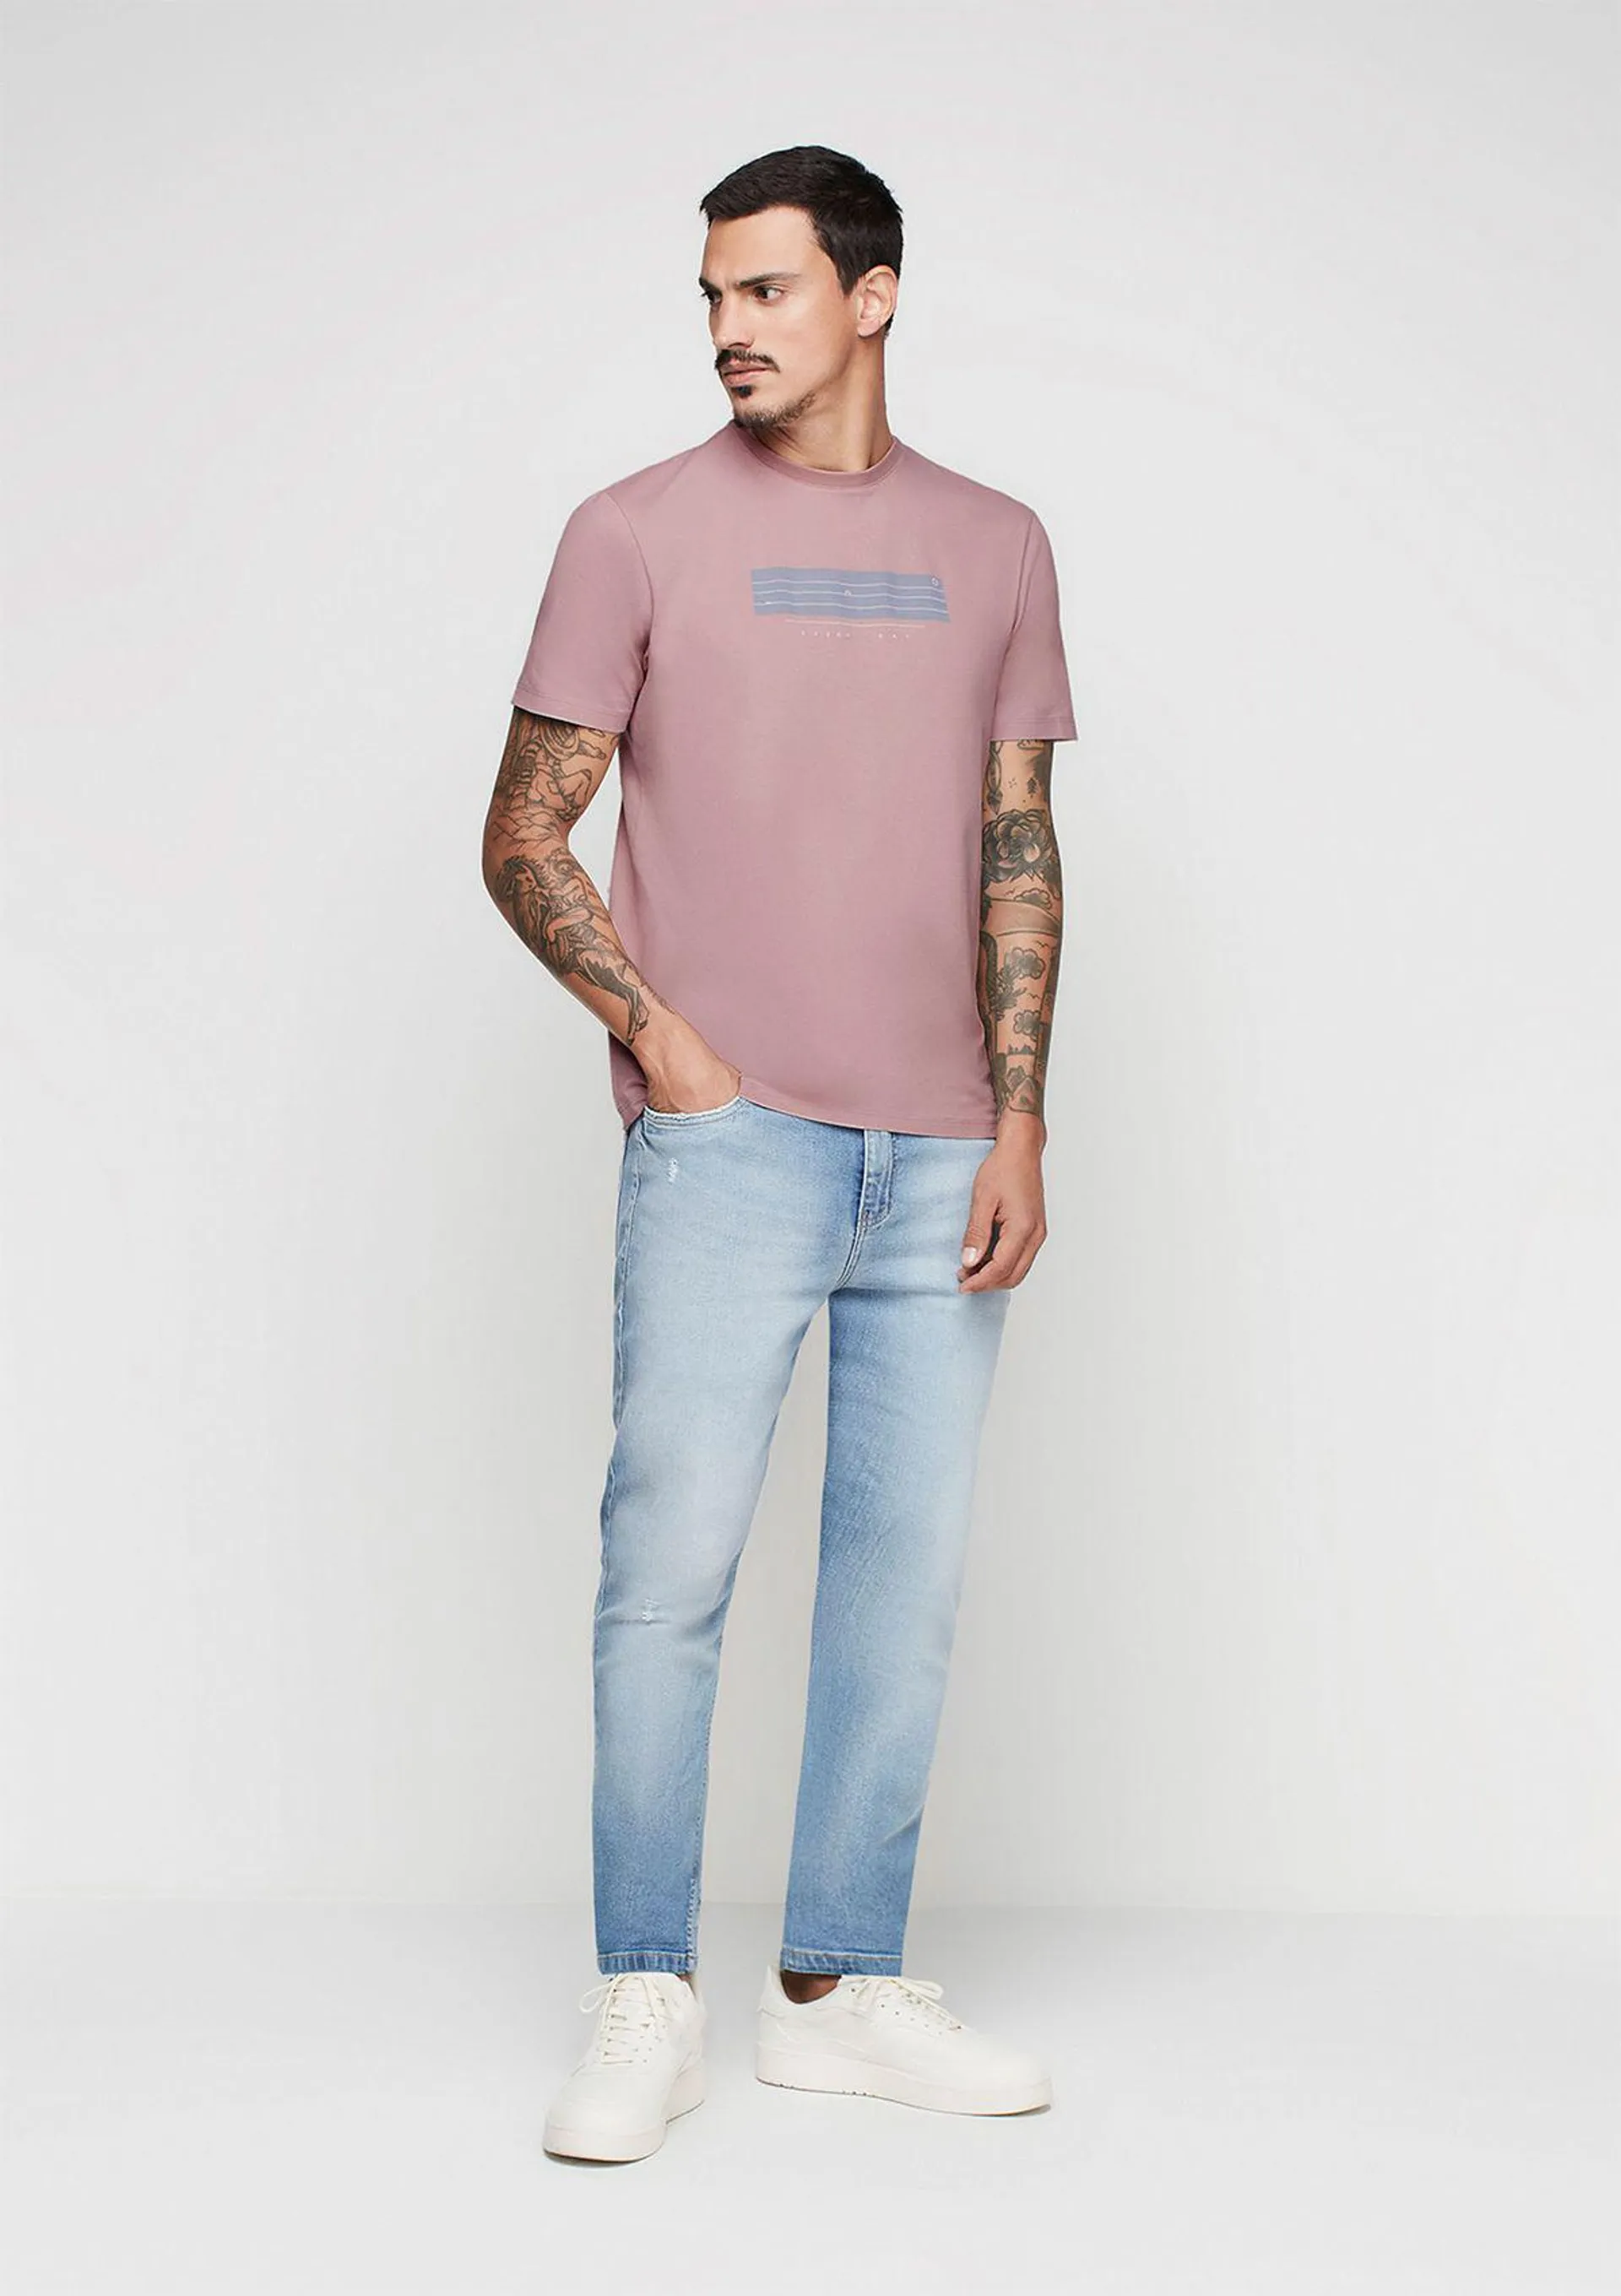 Camiseta Masculina Em Malha Estampada - Rosa